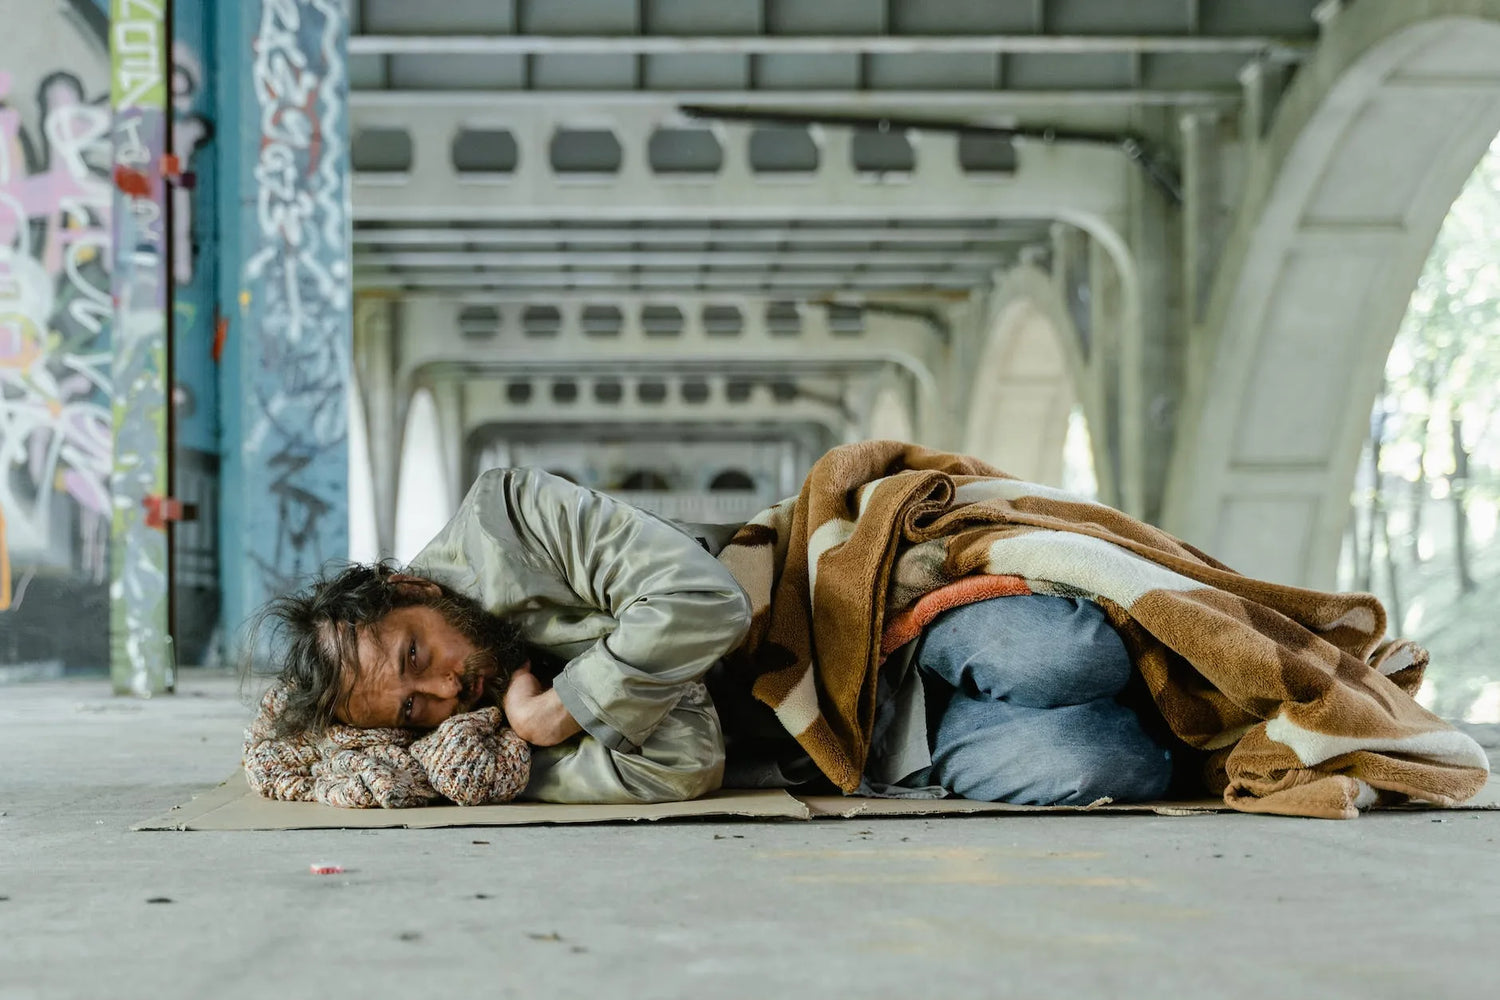 Man rough sleeping under a bridge looking towards the camera.